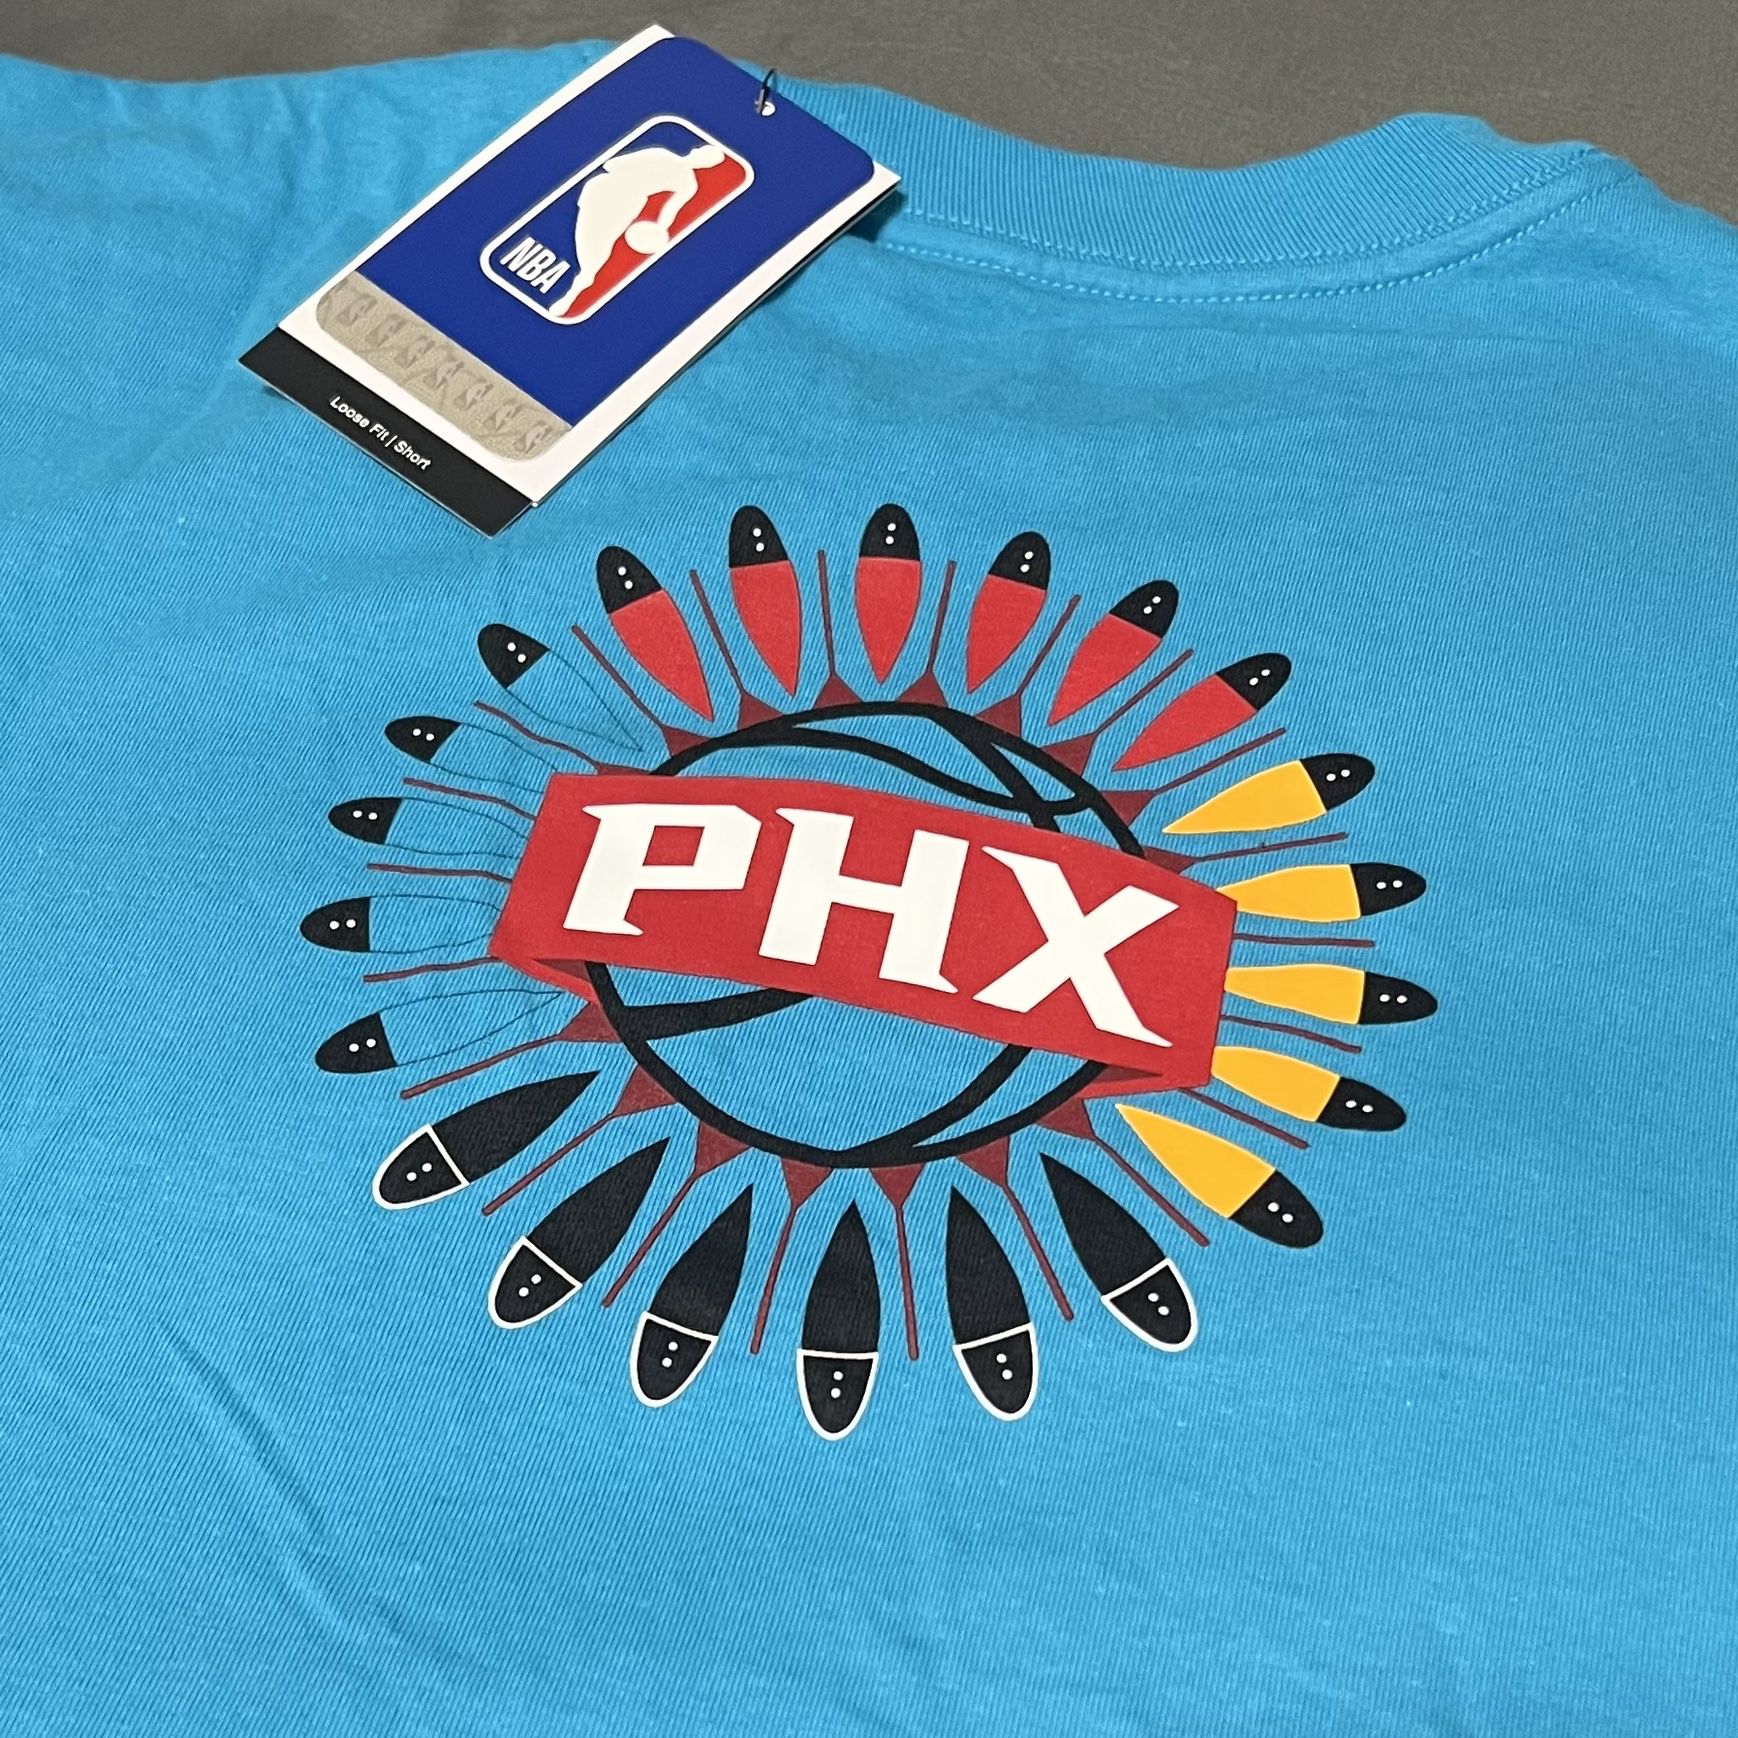 phoenix suns logo shirt